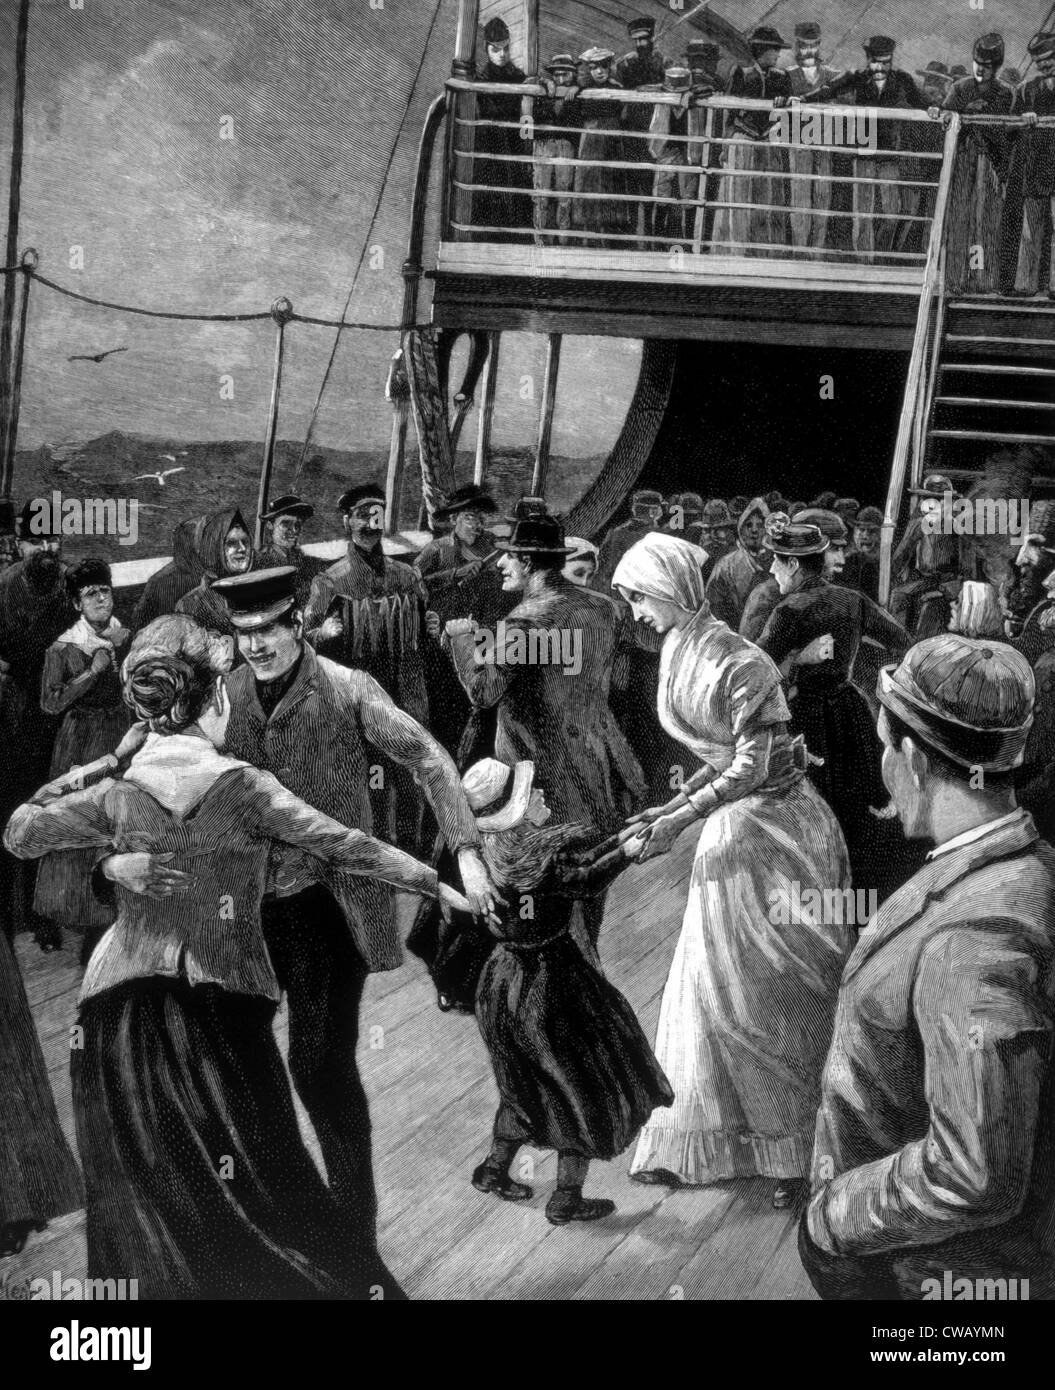 Immigrants dancing in the steerage mid-ocean en route to New York, c. 1891. Stock Photo